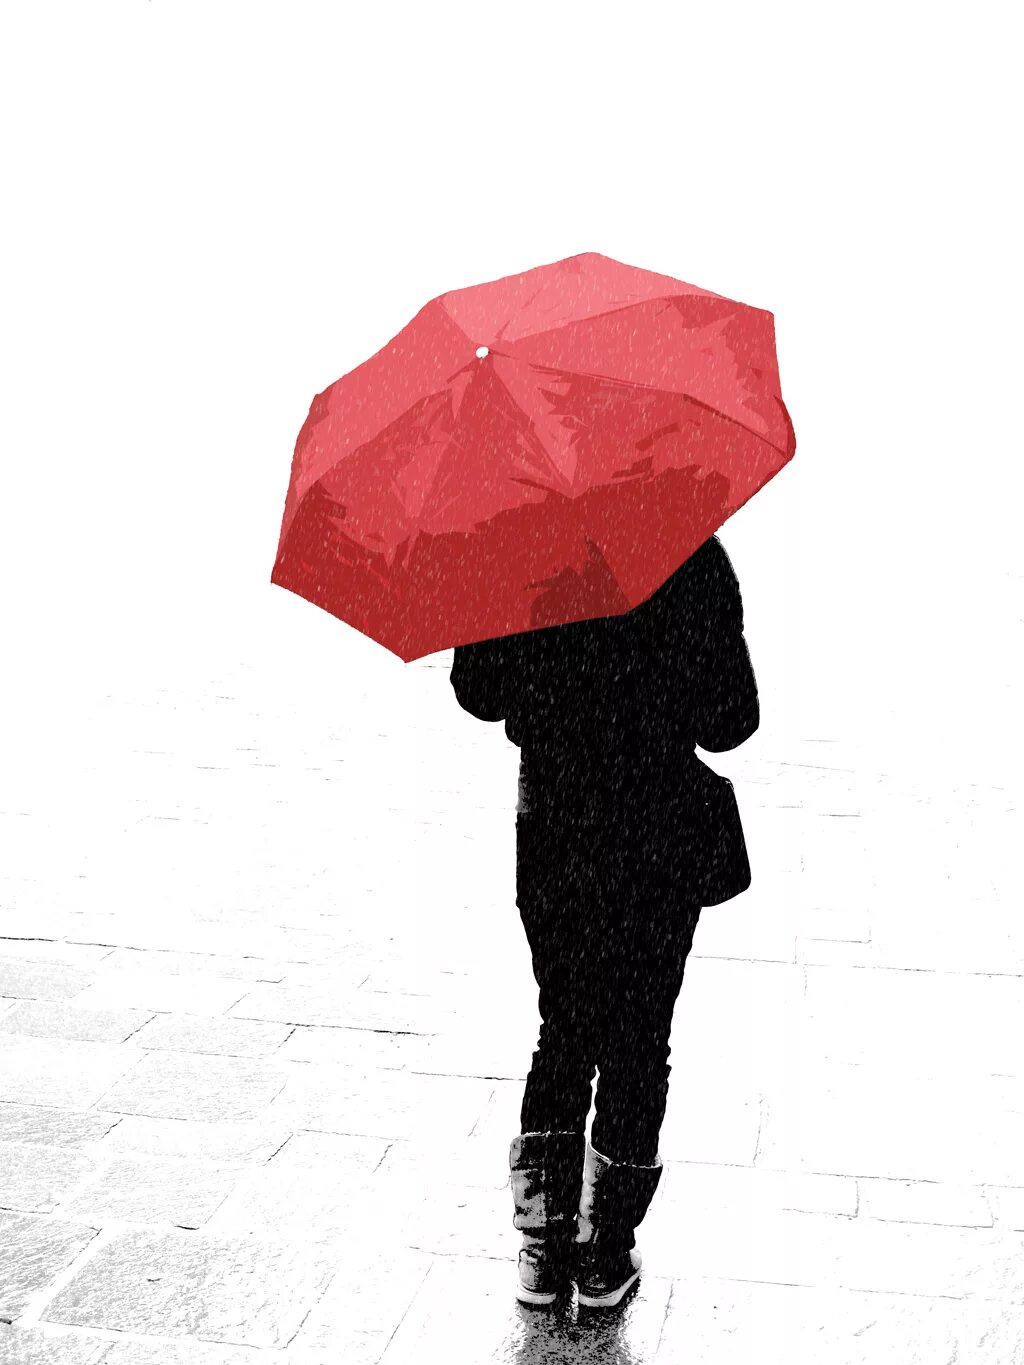 Зонтик сидит. Девушка с зонтом. Девушка с красным зонтиком. Человек с красным зонтом. Девушка с красным зонтом.